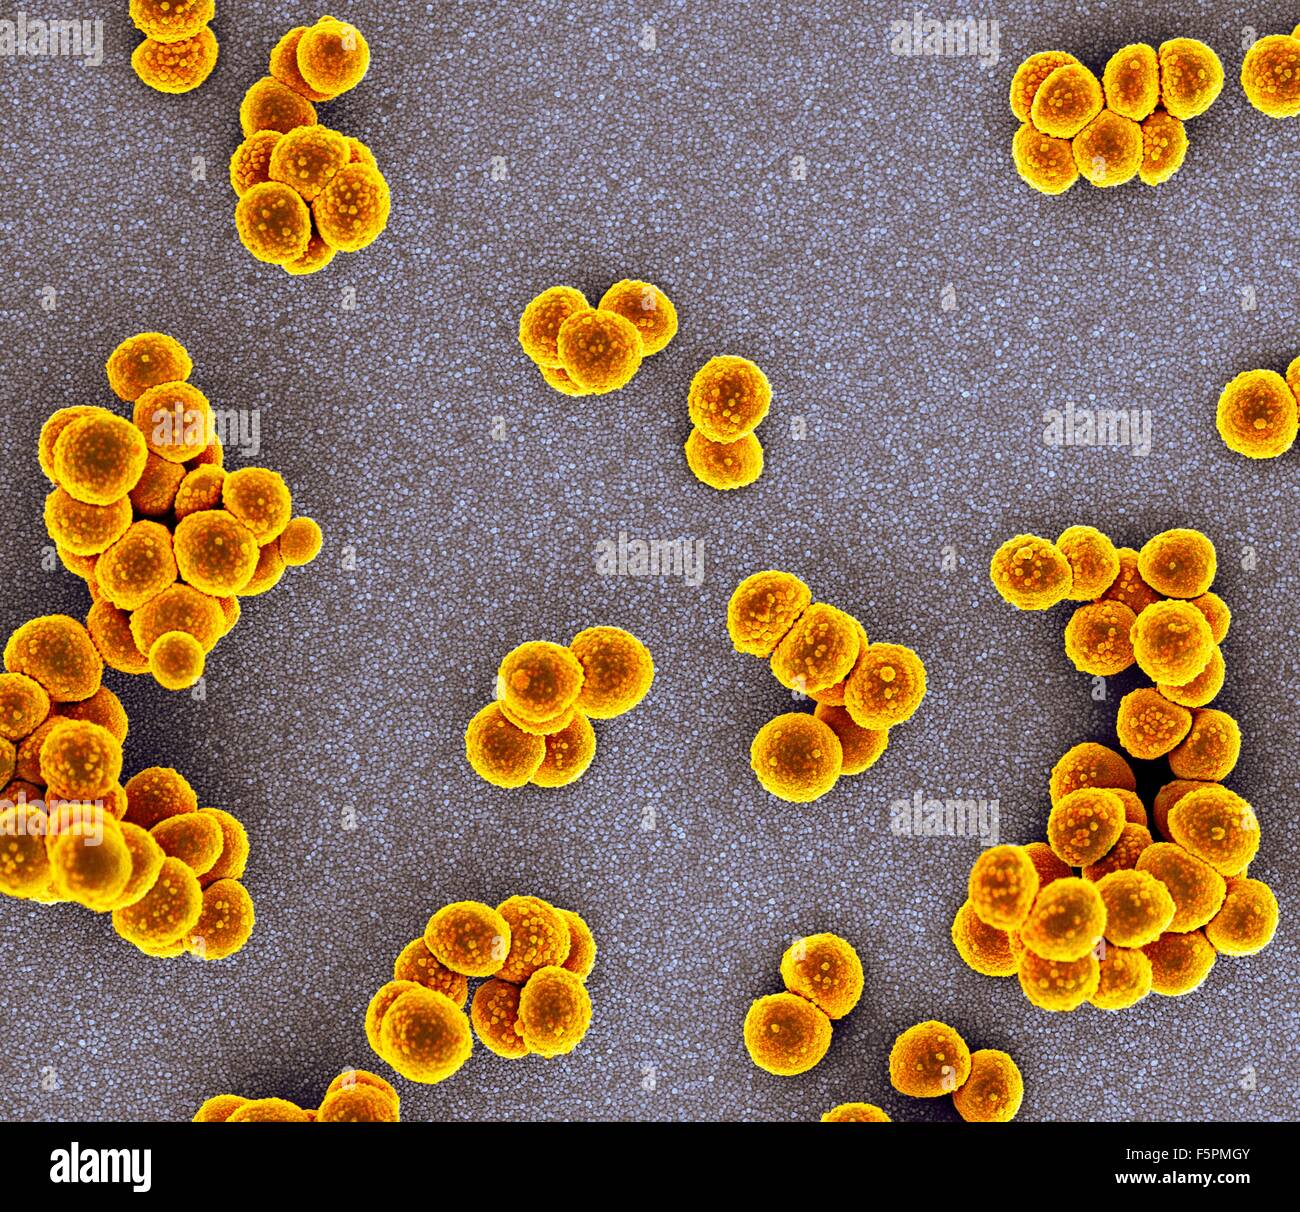 MRSA bacteria. Coloured scanning electron micrograph (SEM) of methicillin-resistant Staphylococcus aureus (MRSA) bacteria Stock Photo